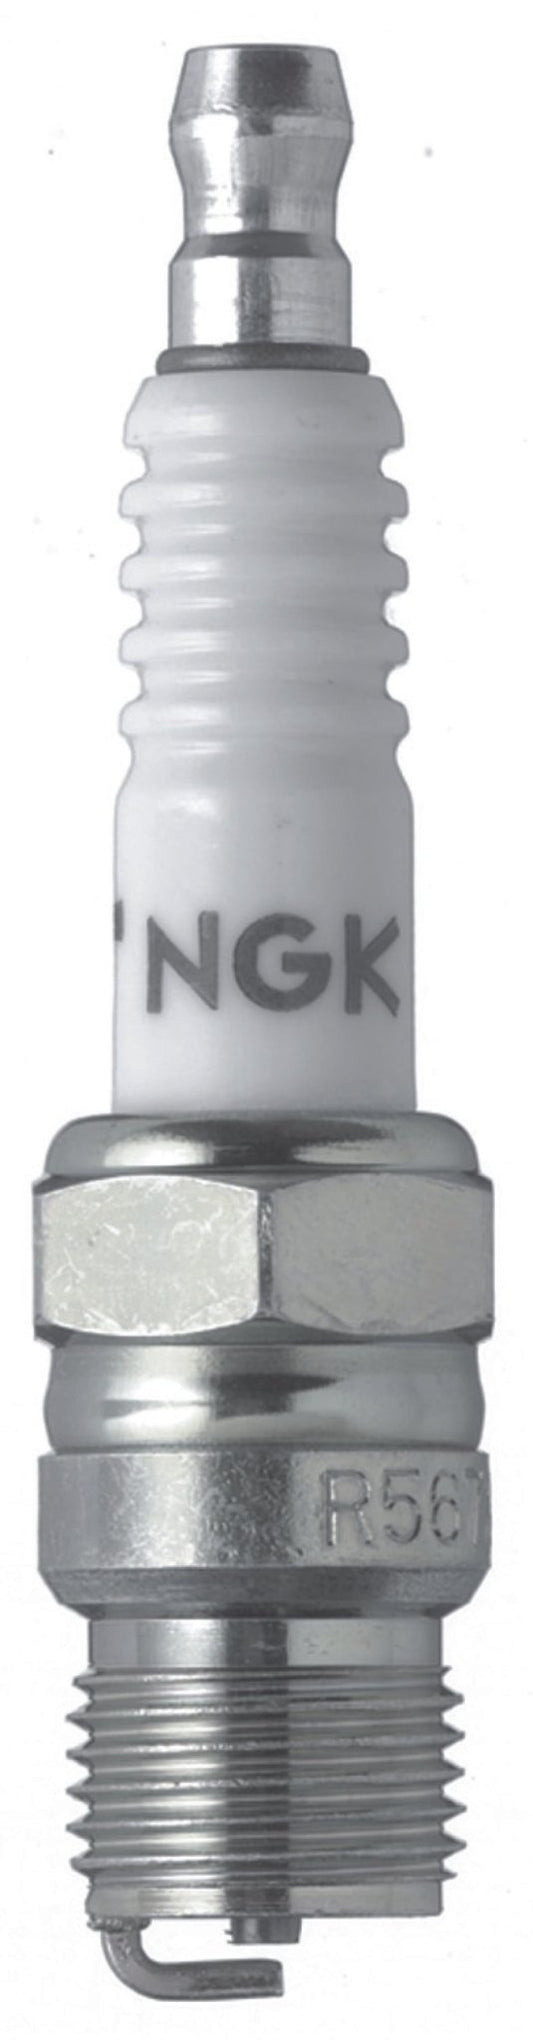 NGK - NGK Cooper Core Spark Plug Box of 4 (R5673-8) - Demon Performance